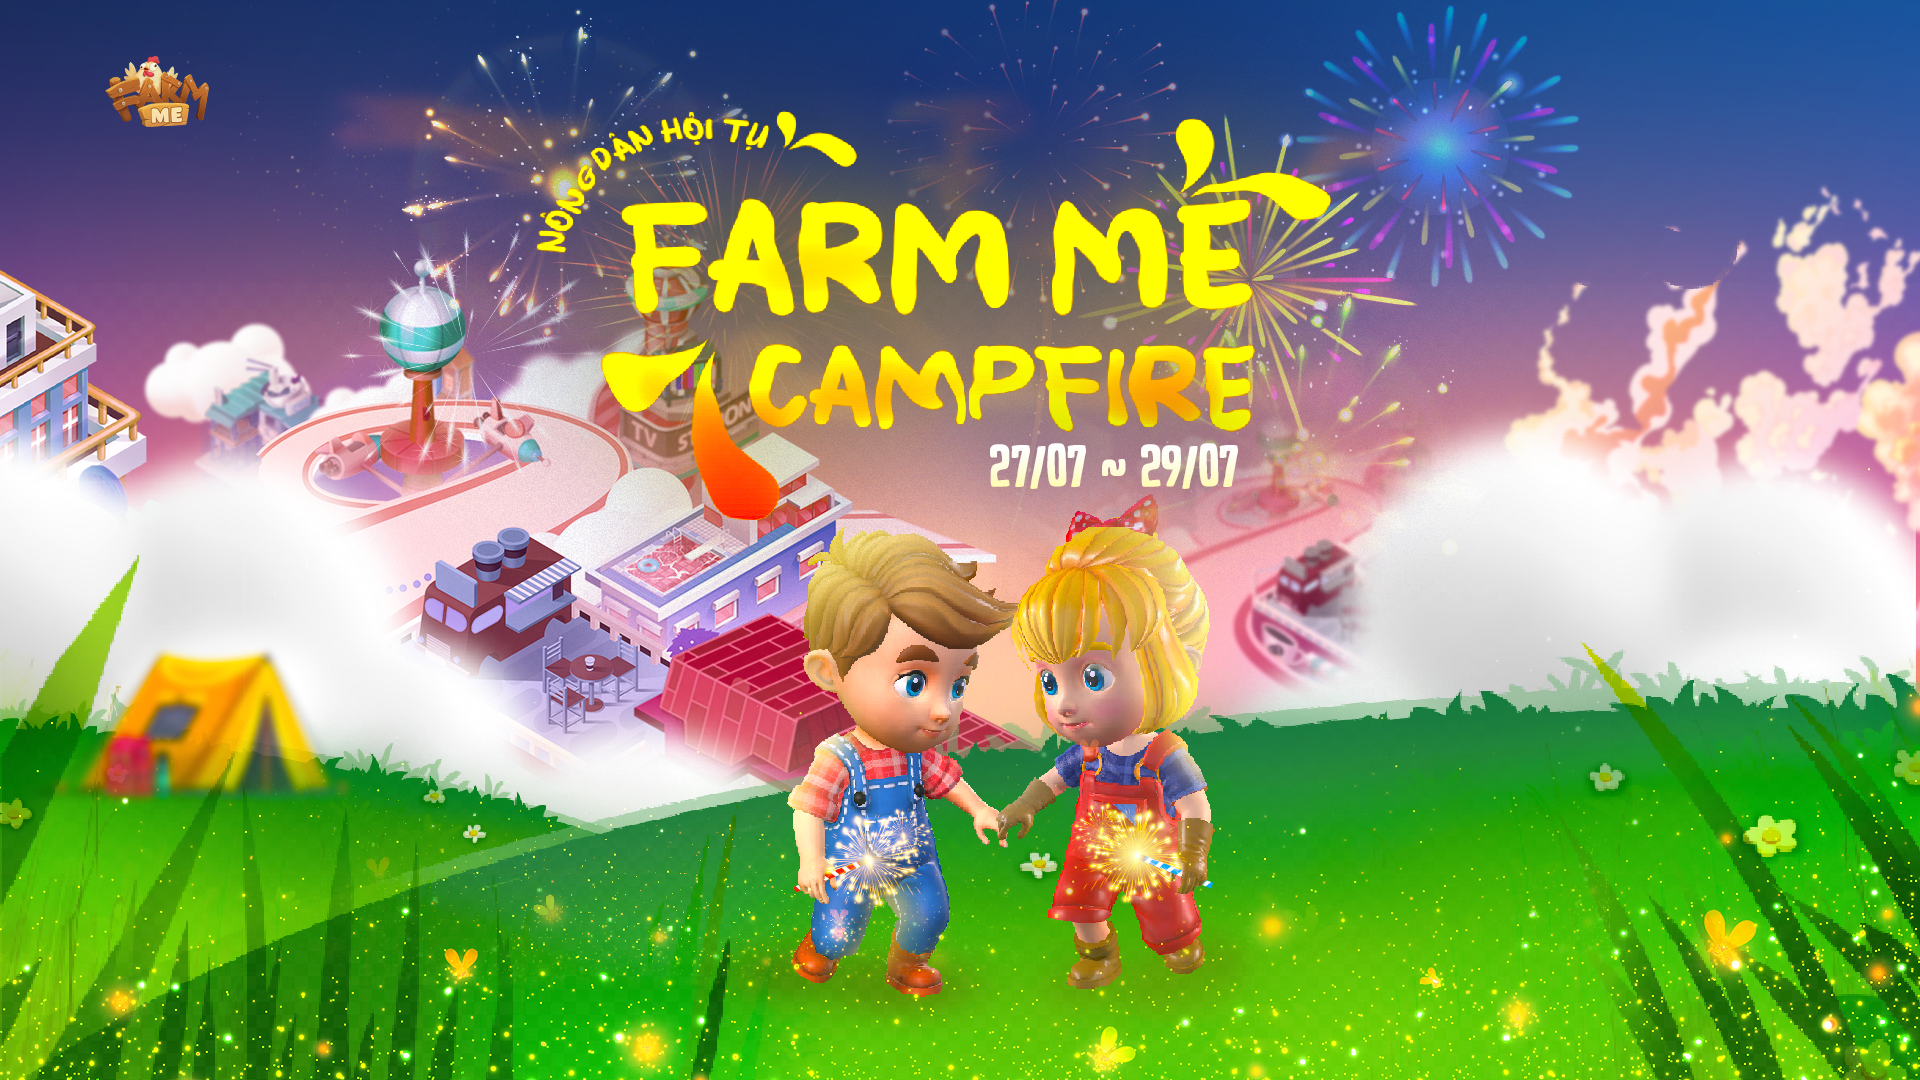 FARM ME CAMPFIRE - FARMERS GATHERING